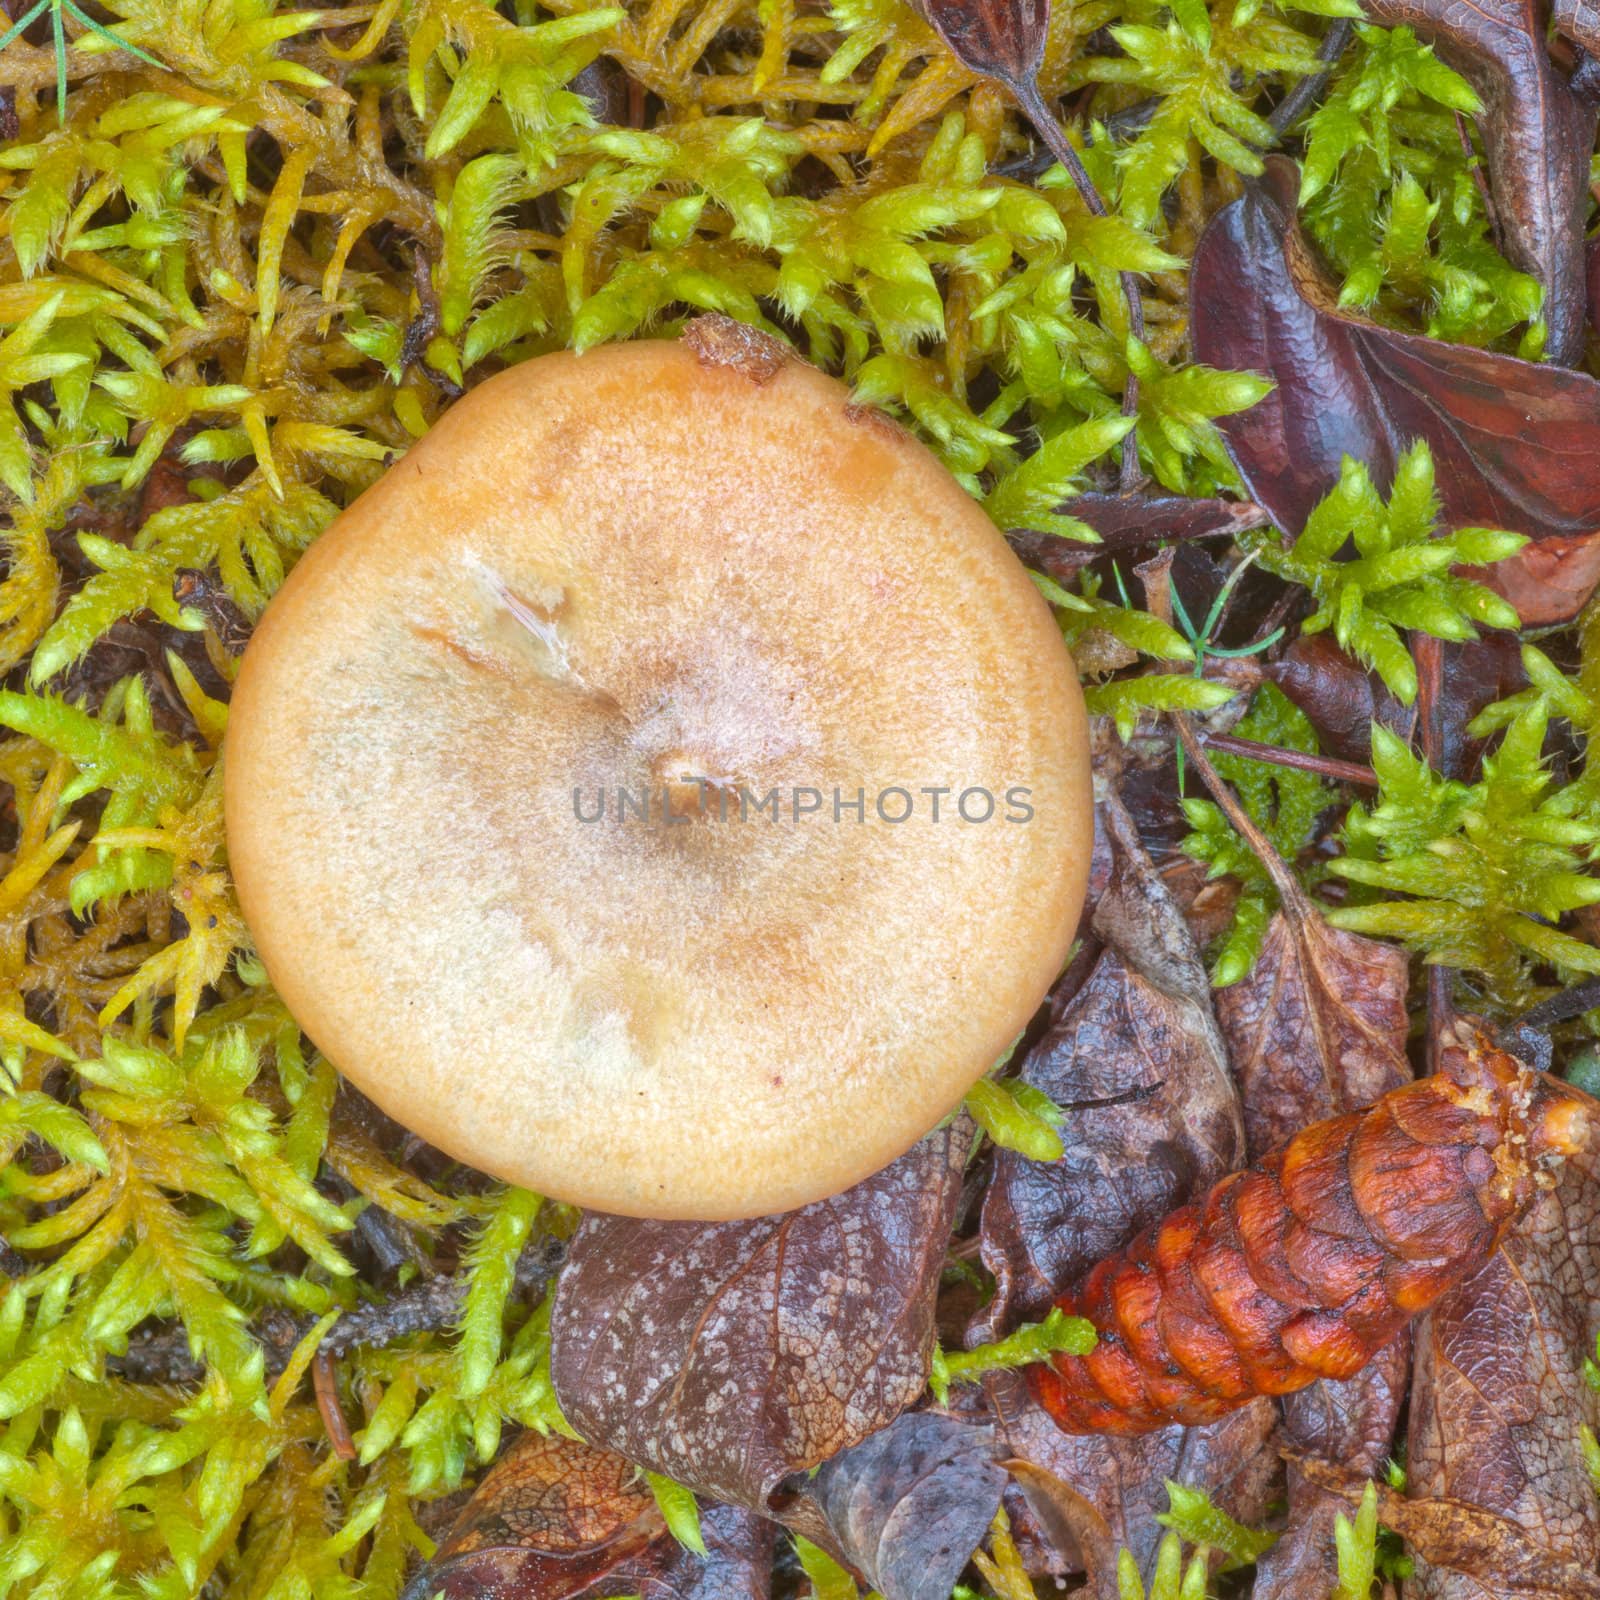 Delicious Milk Cap Mushroom grows on forest floor by PiLens